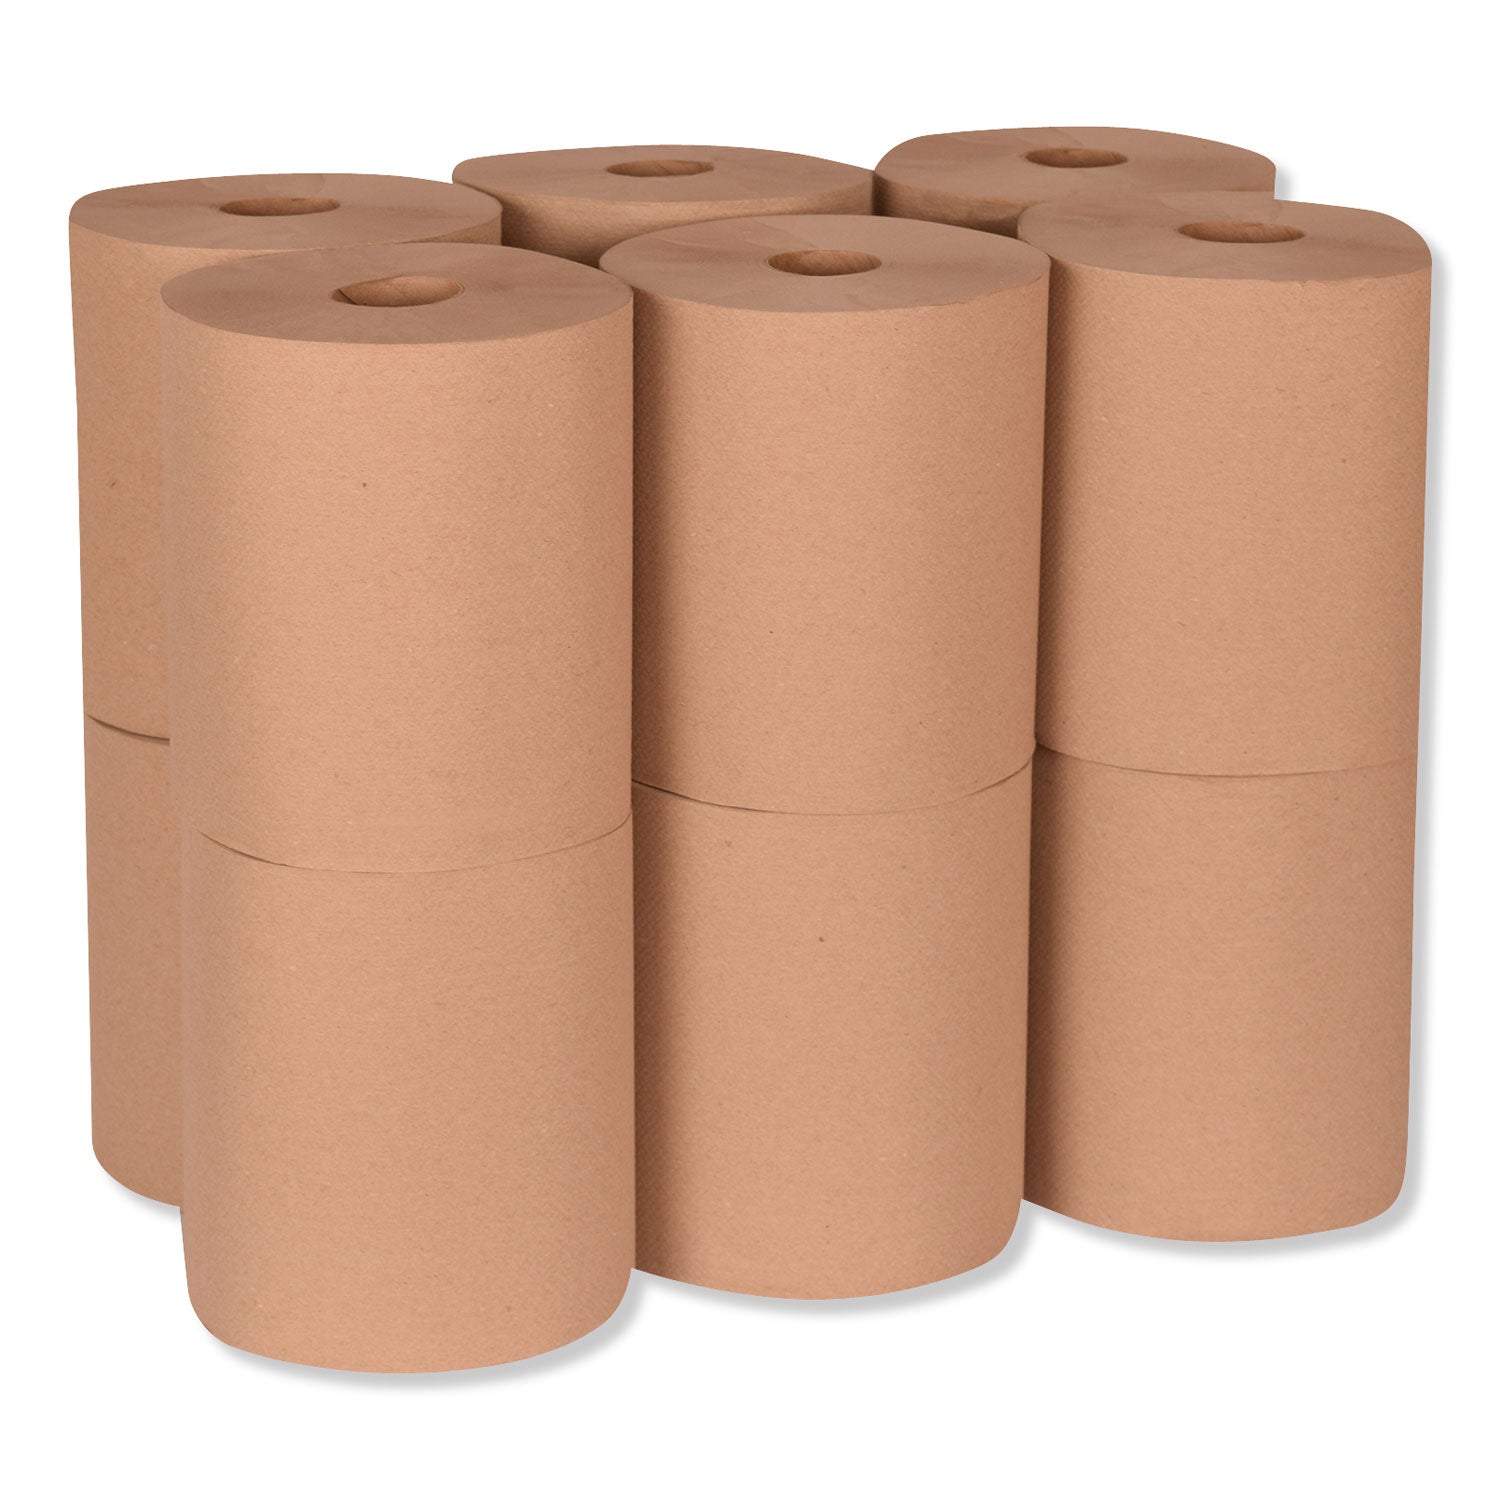 universal-hardwound-roll-towel-1-ply-788-x-600-ft-natural-12-carton_trkrk600e - 8